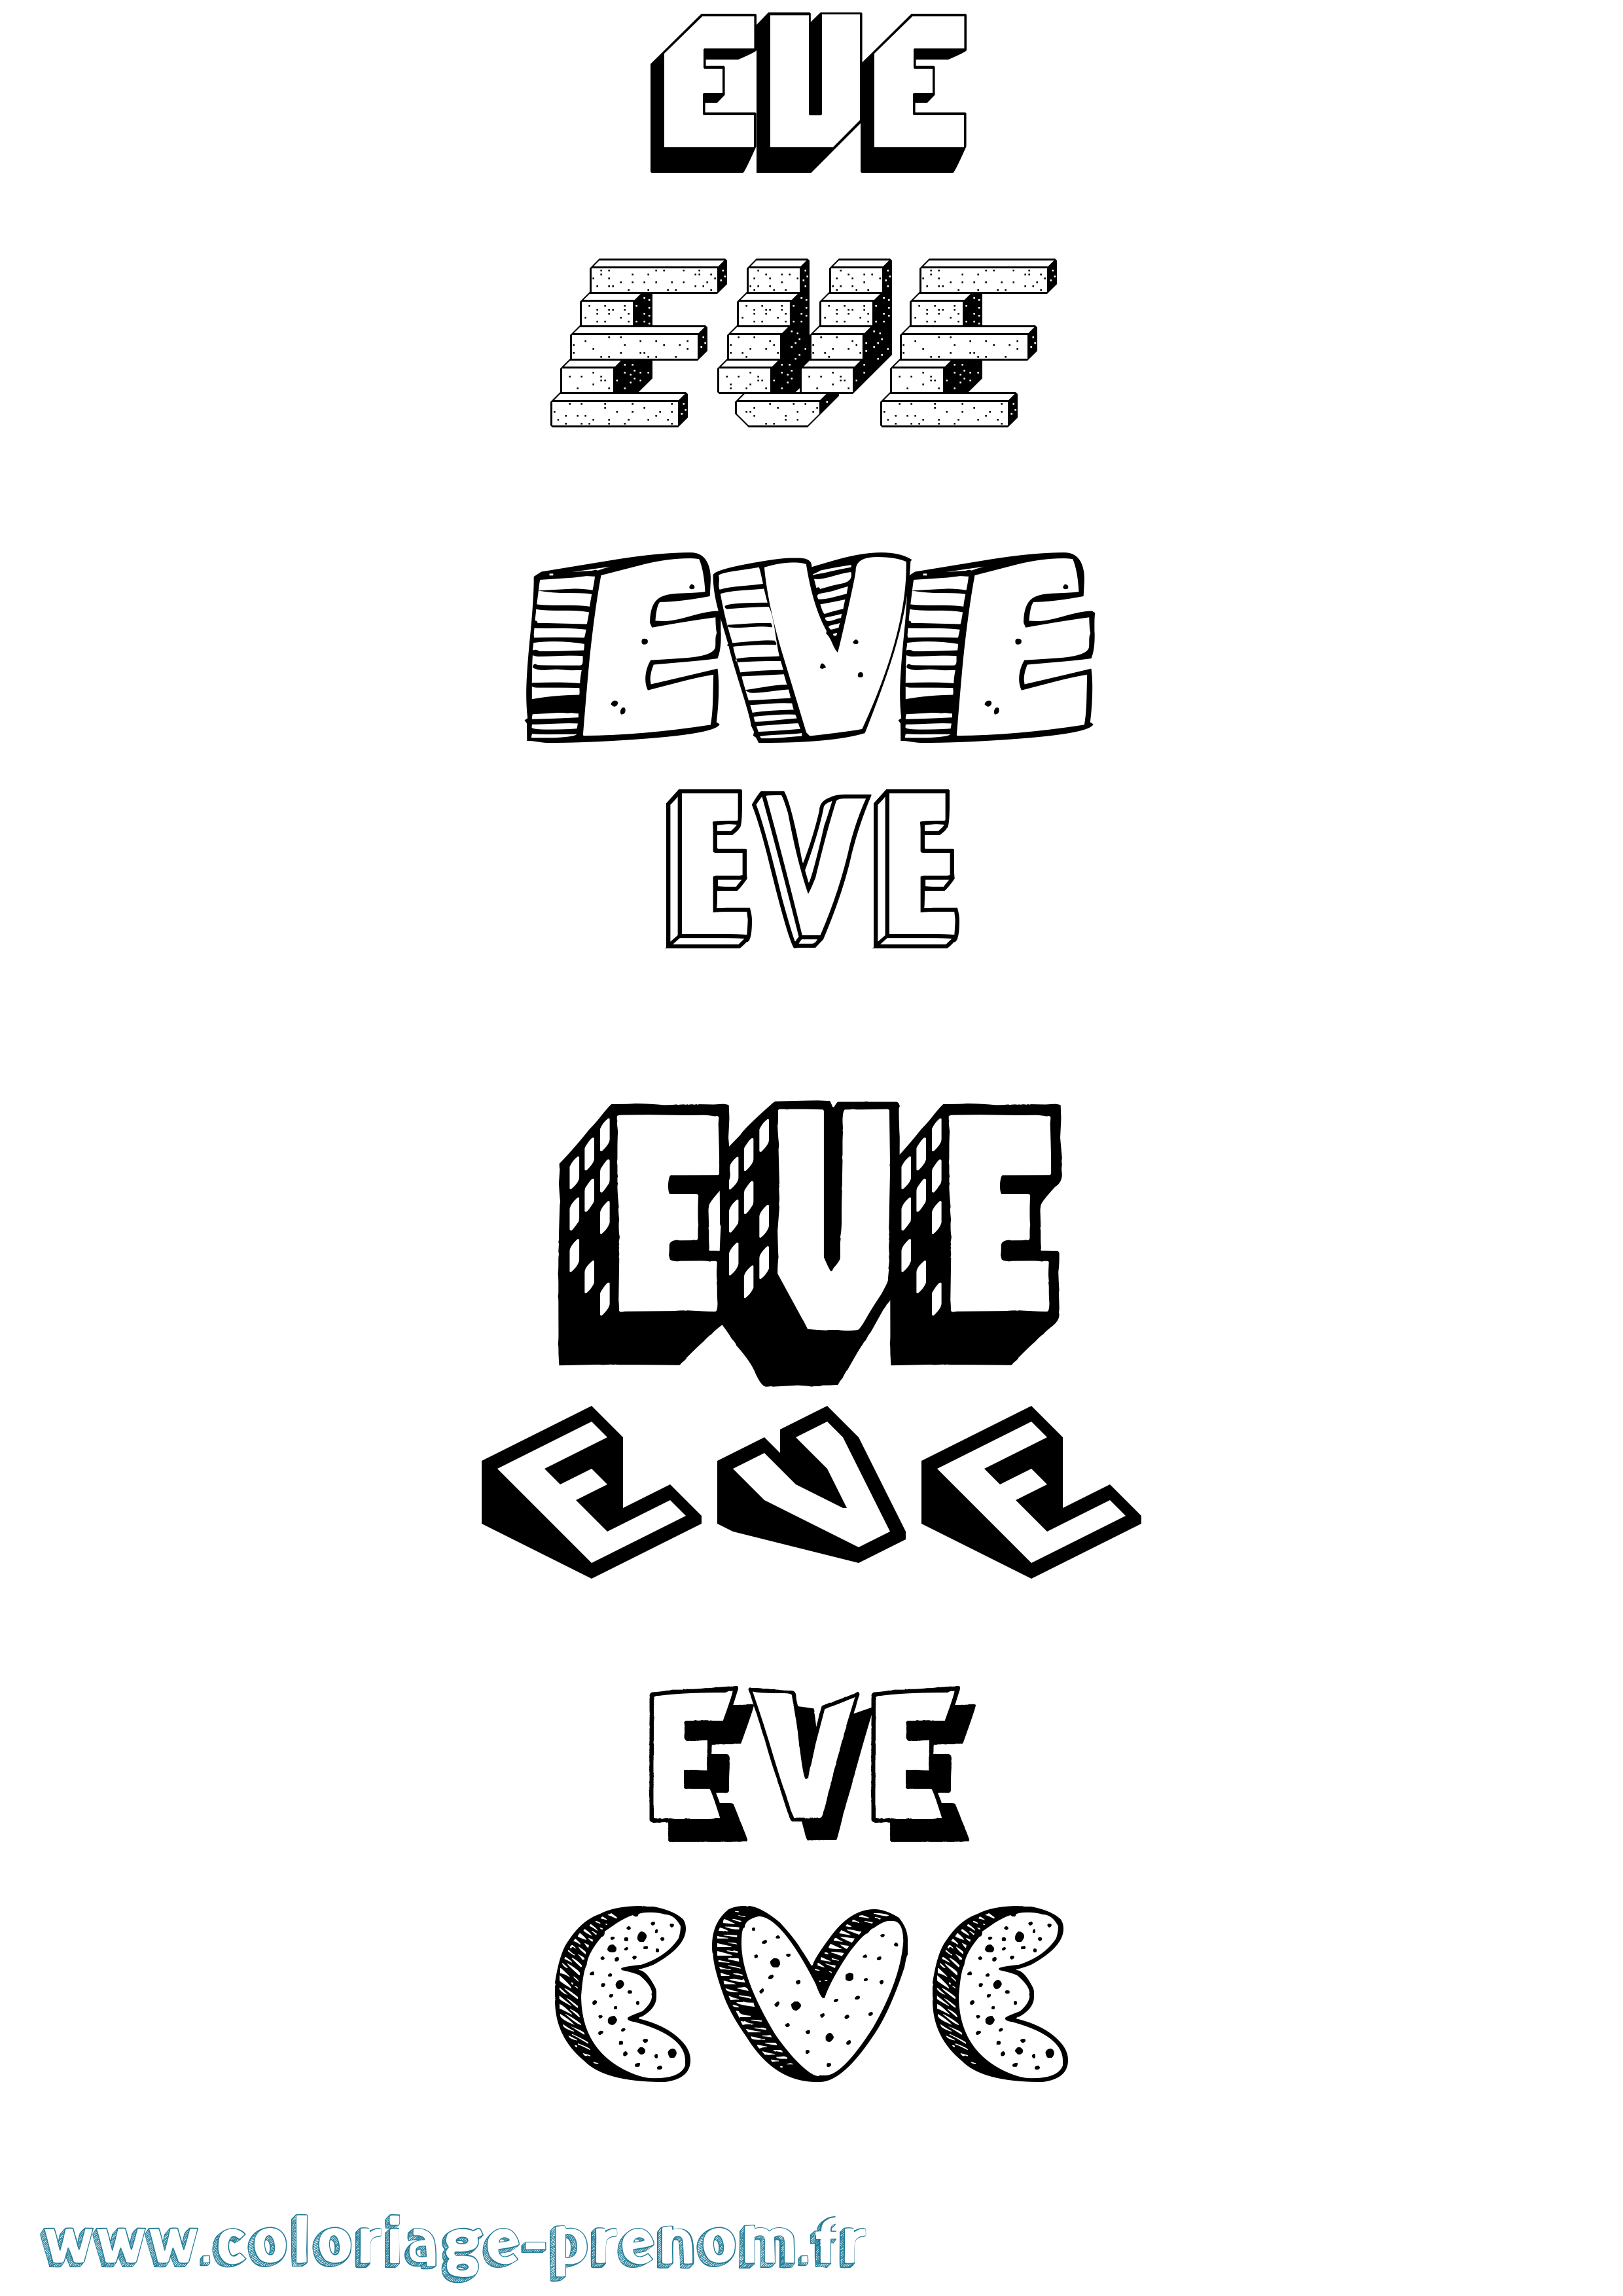 Coloriage prénom Eve Effet 3D